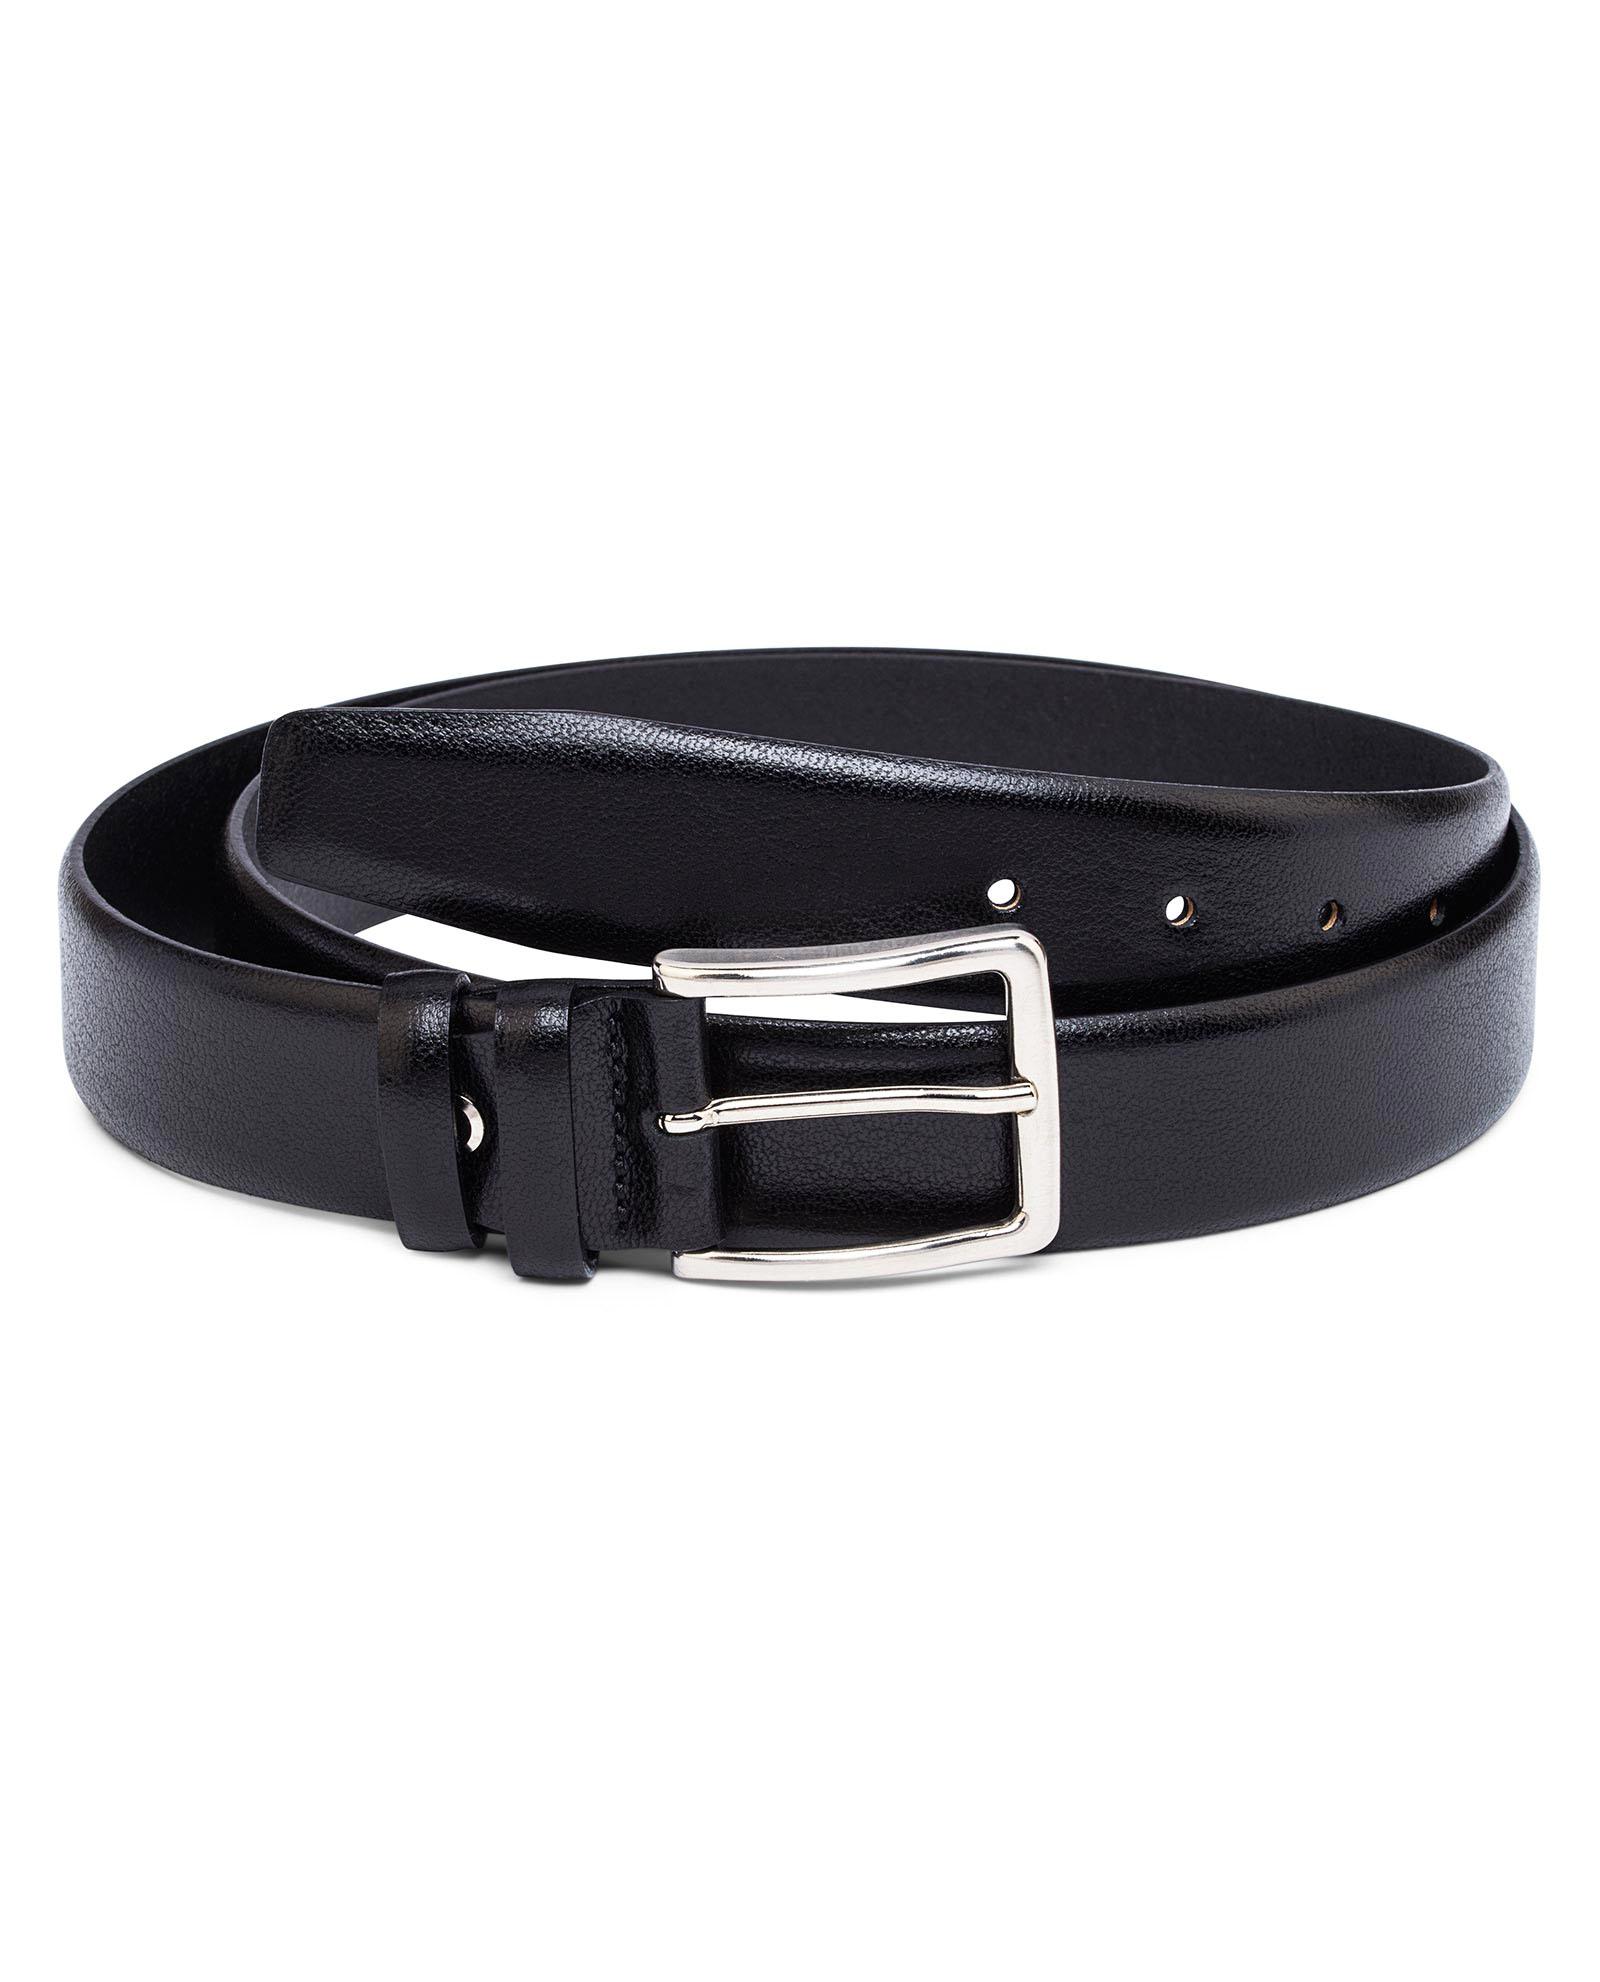 Buy Smooth Mens Black Leather Belt | Italian Calfskin | Free shipping!